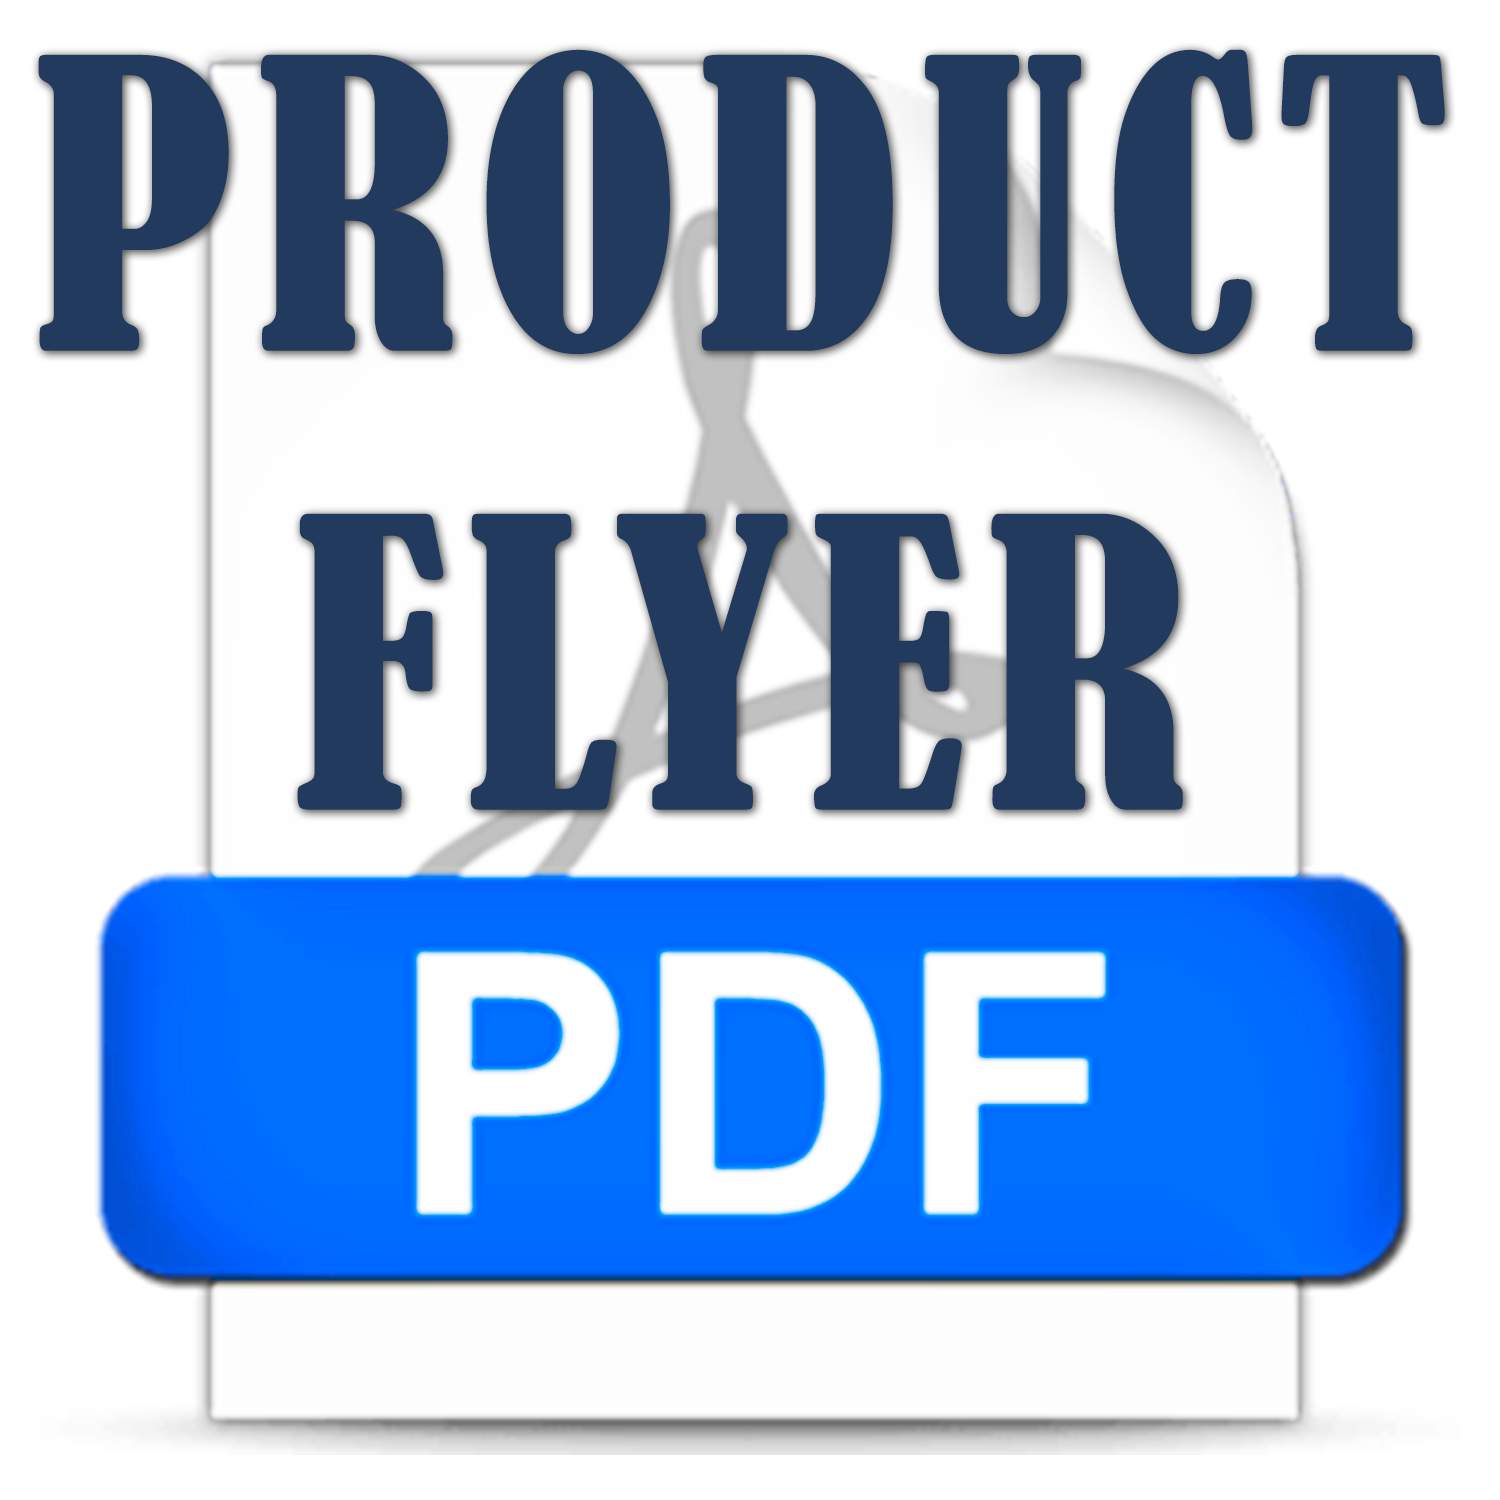 VS-15 Rubber Valves for TPMS product image pdf